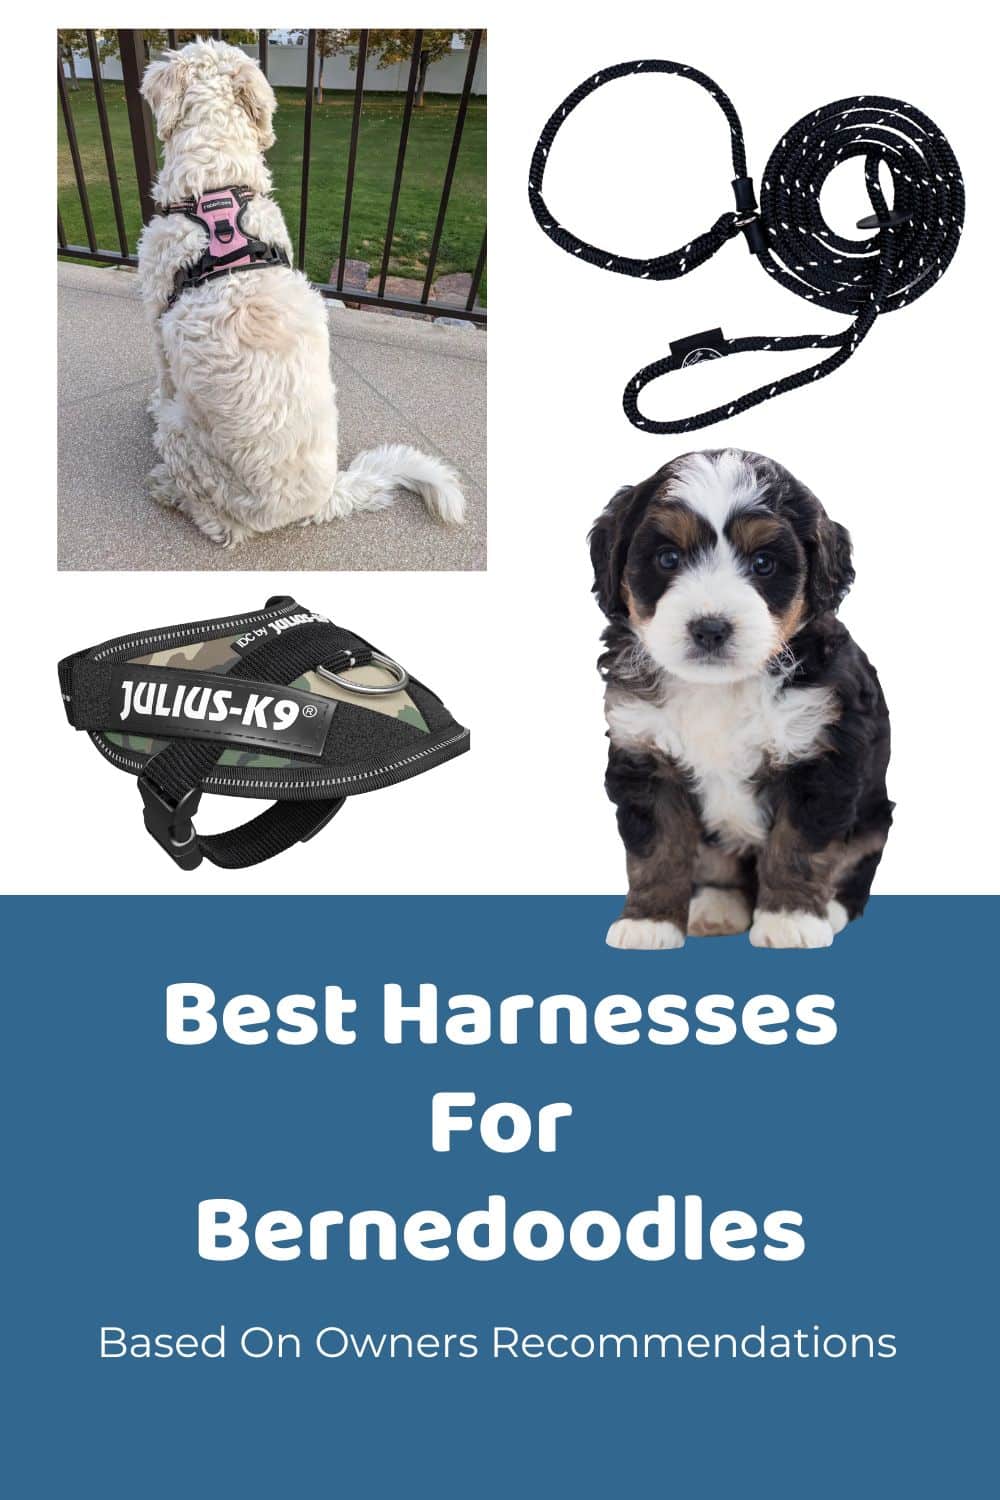 Best Harness For Berendoodles